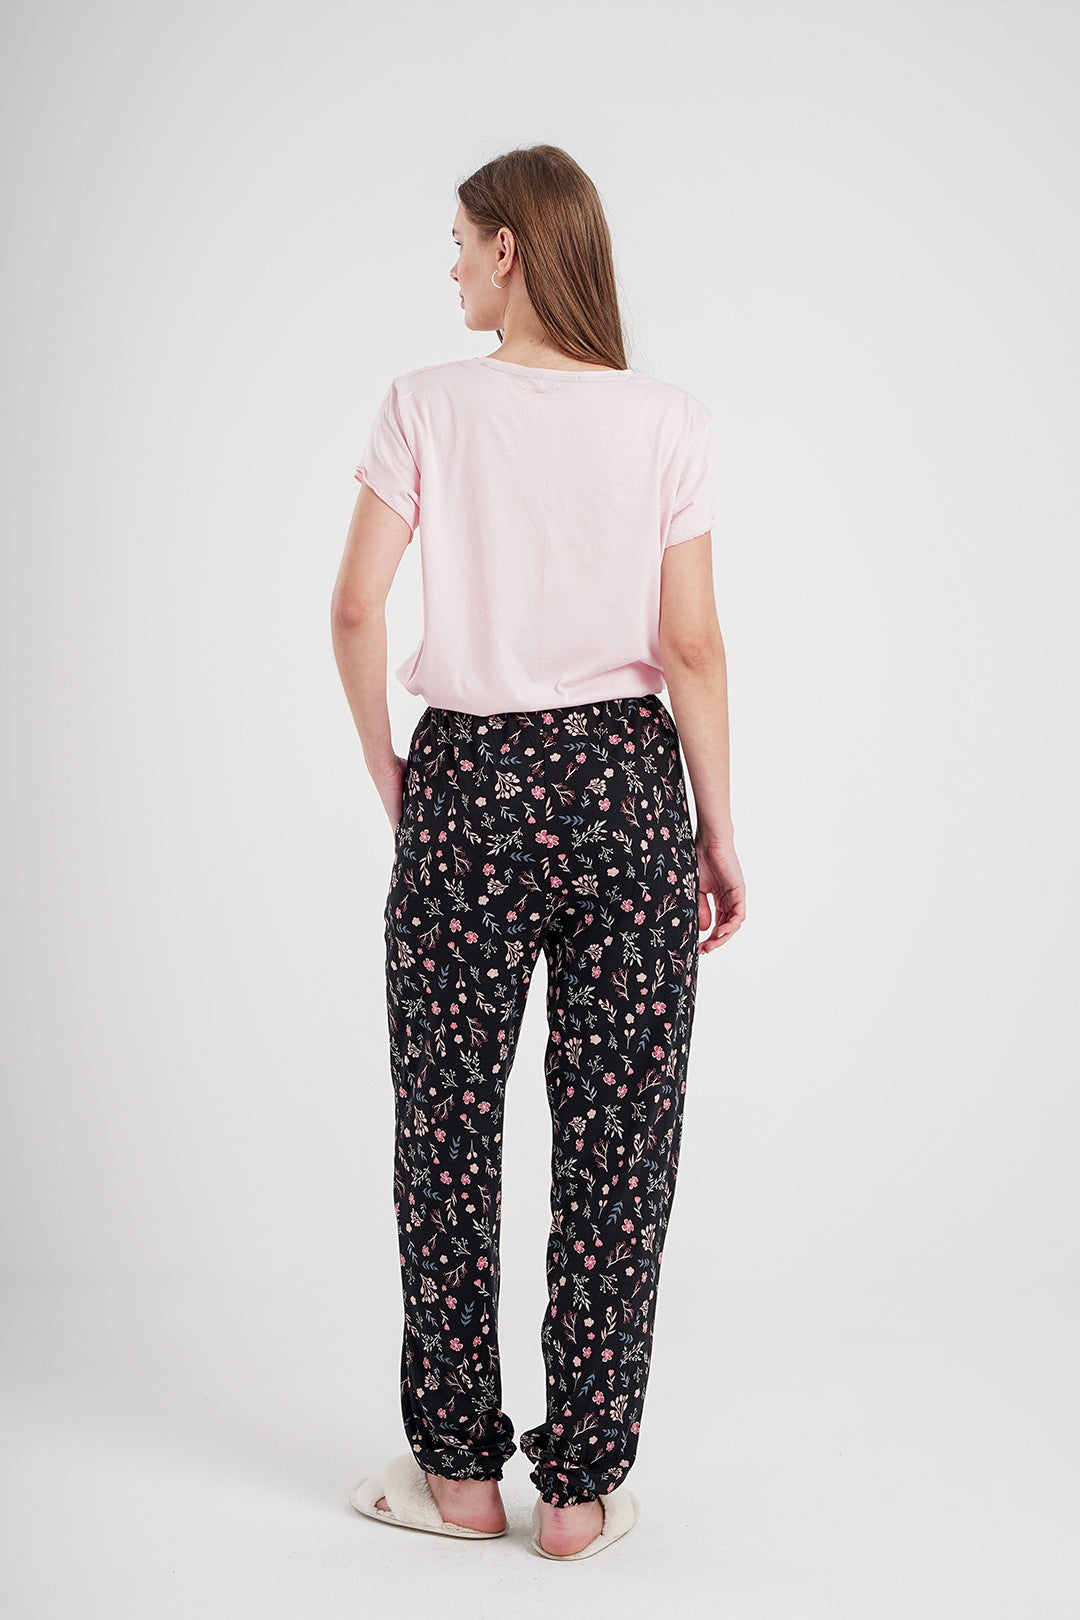 black floral women's pajamas with modal printed pants